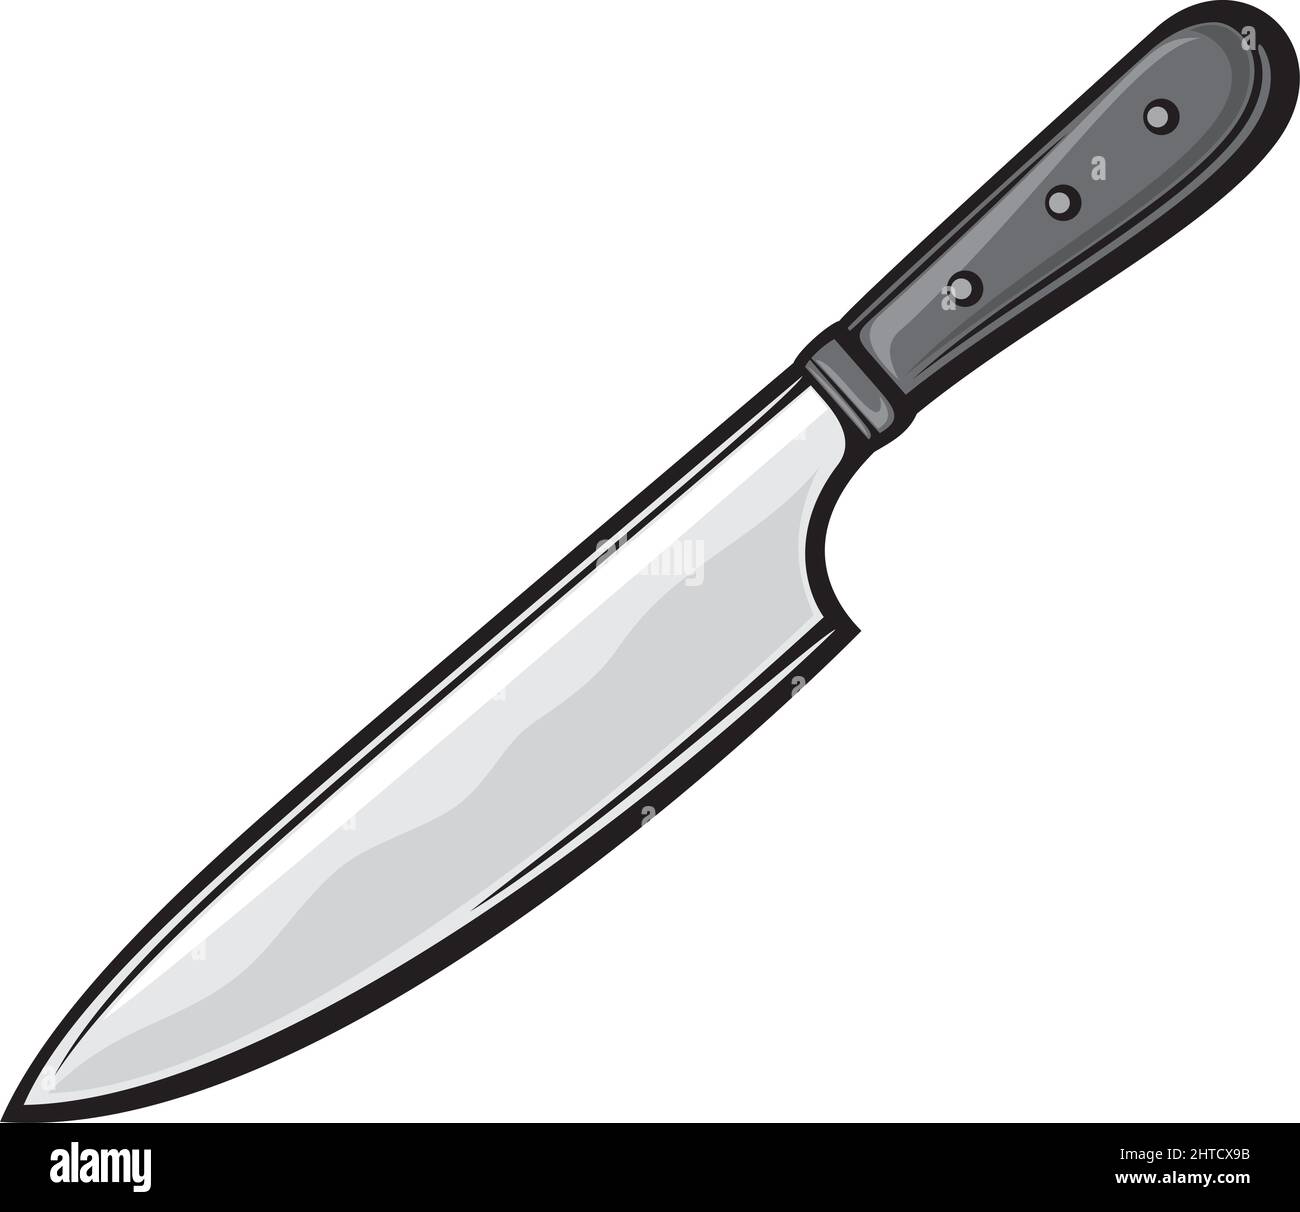 Steel kitchen knife vector illustration Stock Vector Image & Art - Alamy